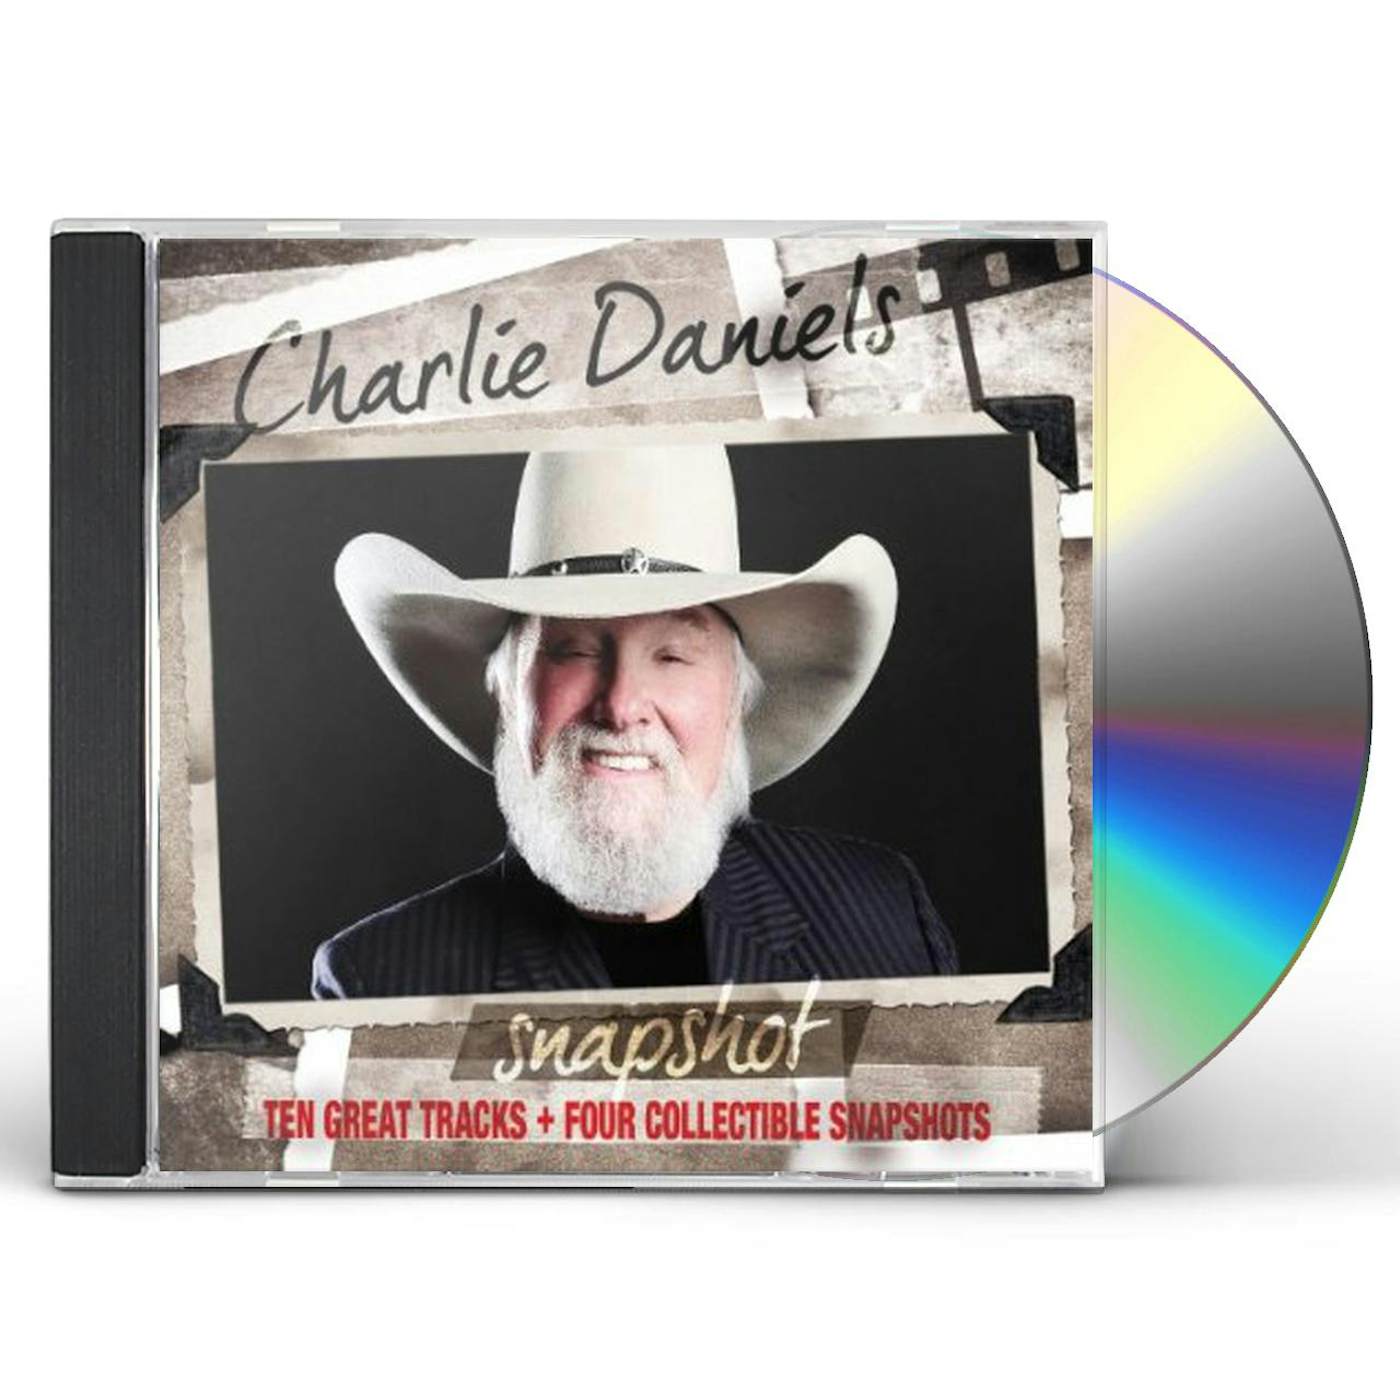 SNAPSHOT: THE CHARLIE DANIELS BAND CD